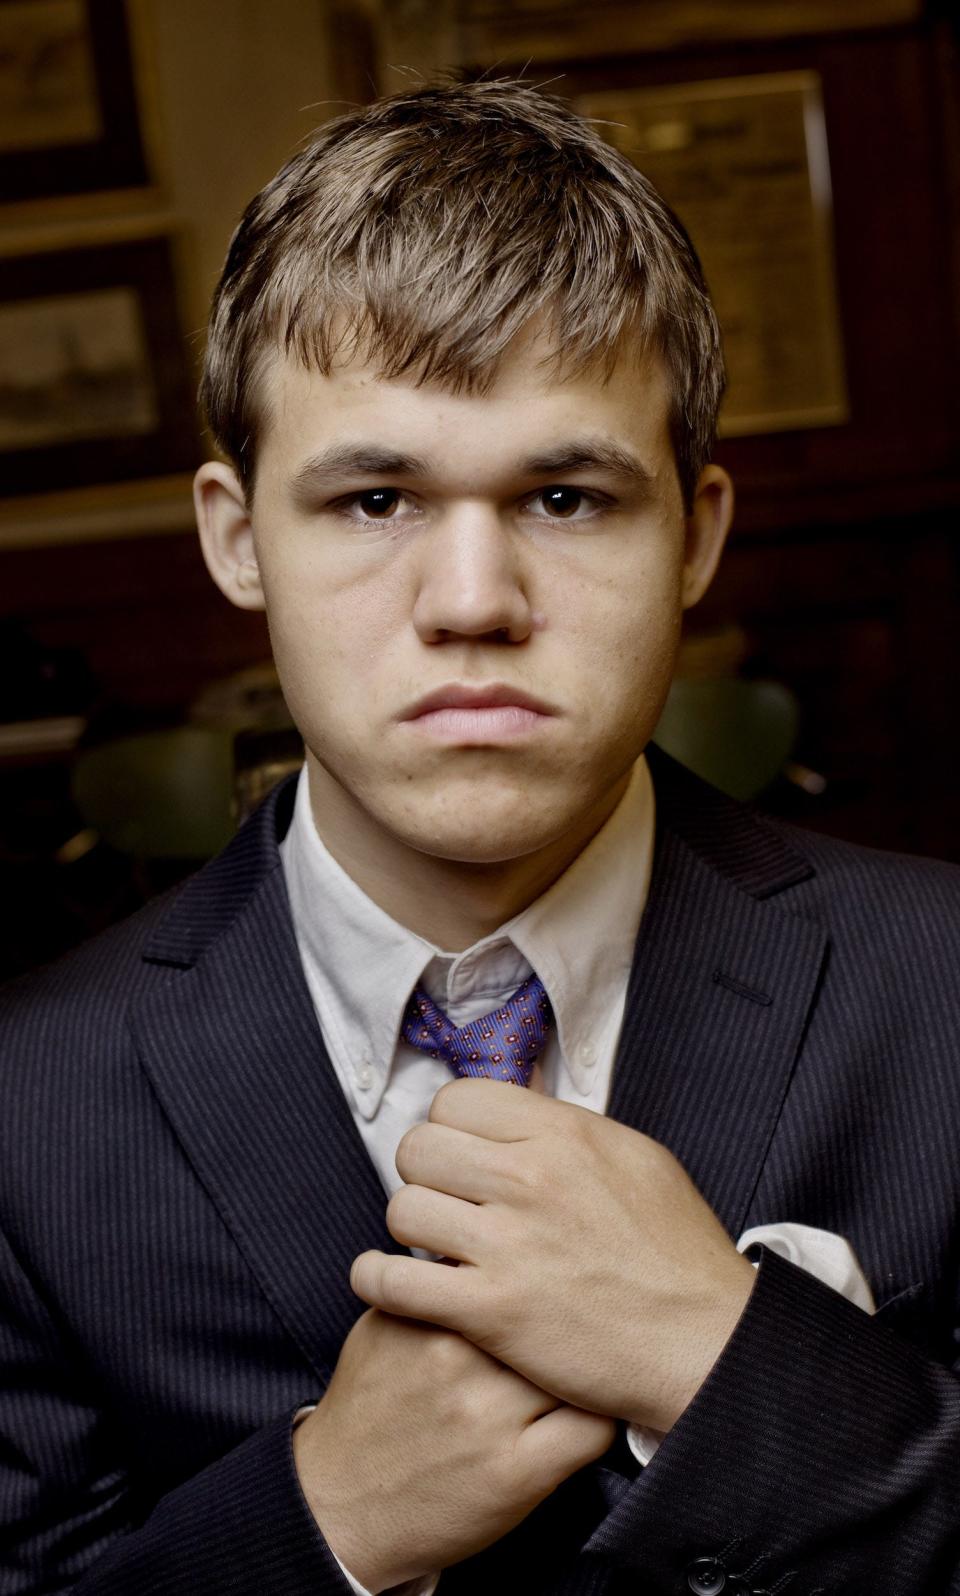 Magnus Carlsen straightened his tie in 2009.